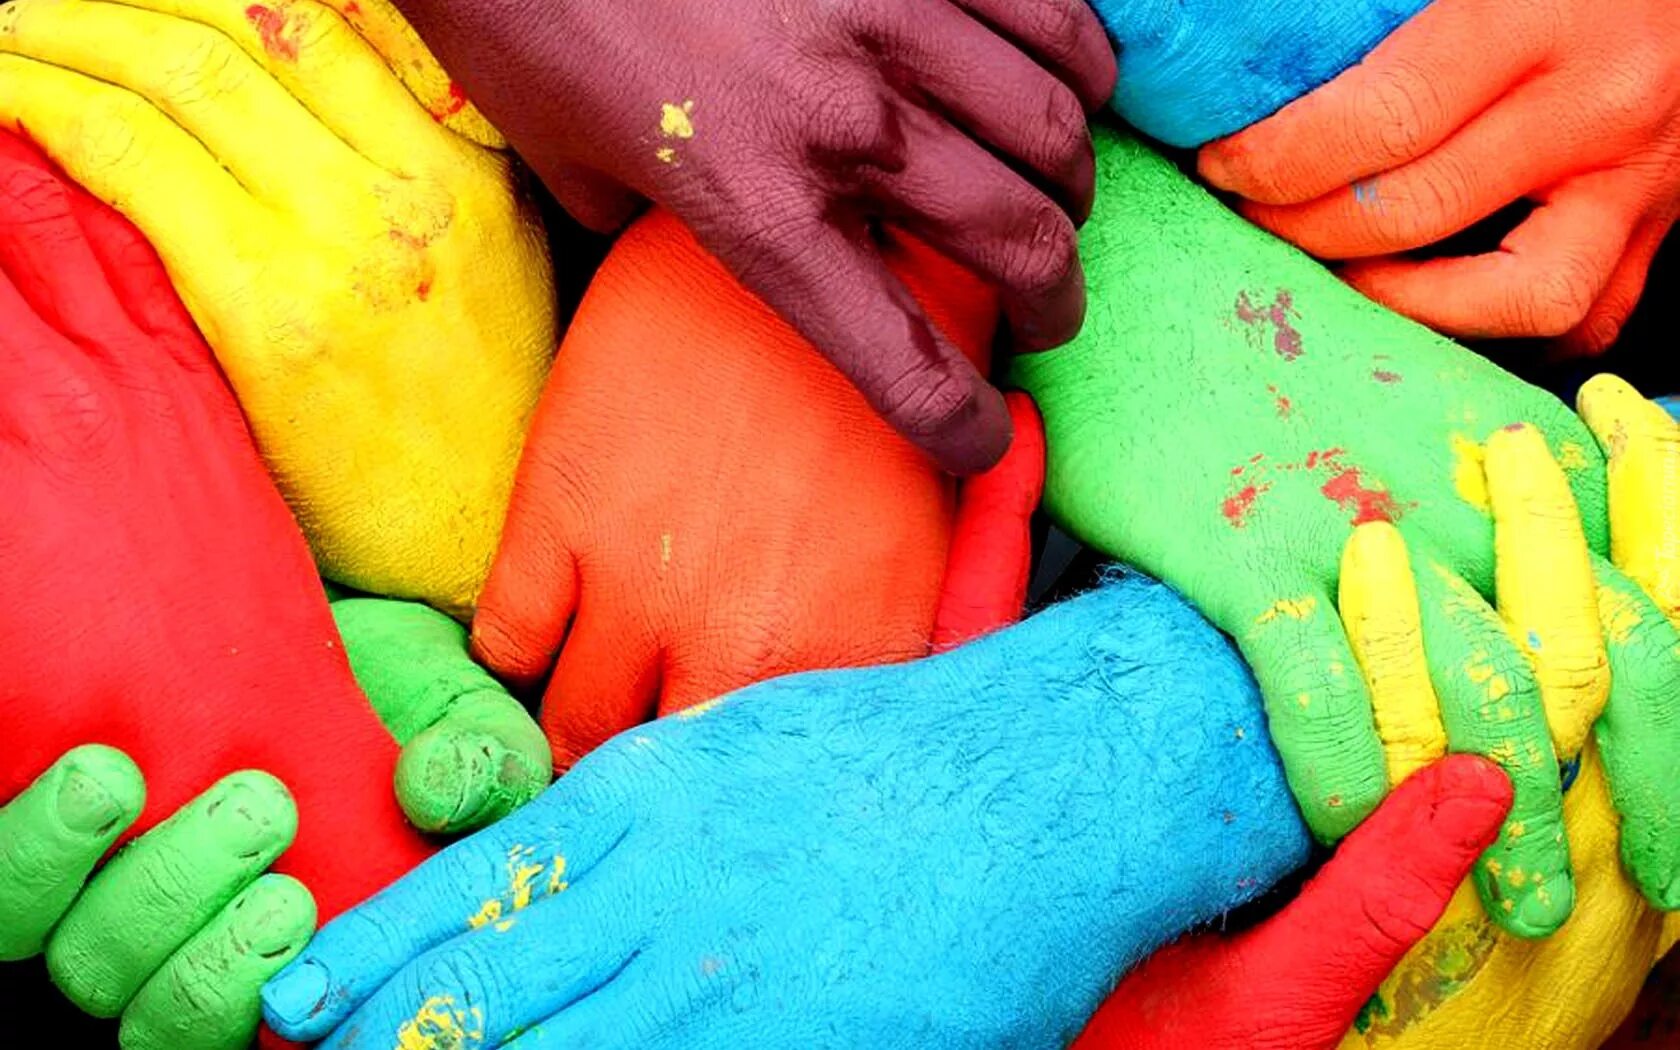 All hands the colours high. Разноцветные ладони. Цветные руки. Разноцветные руки детей. Много разноцветных рук.